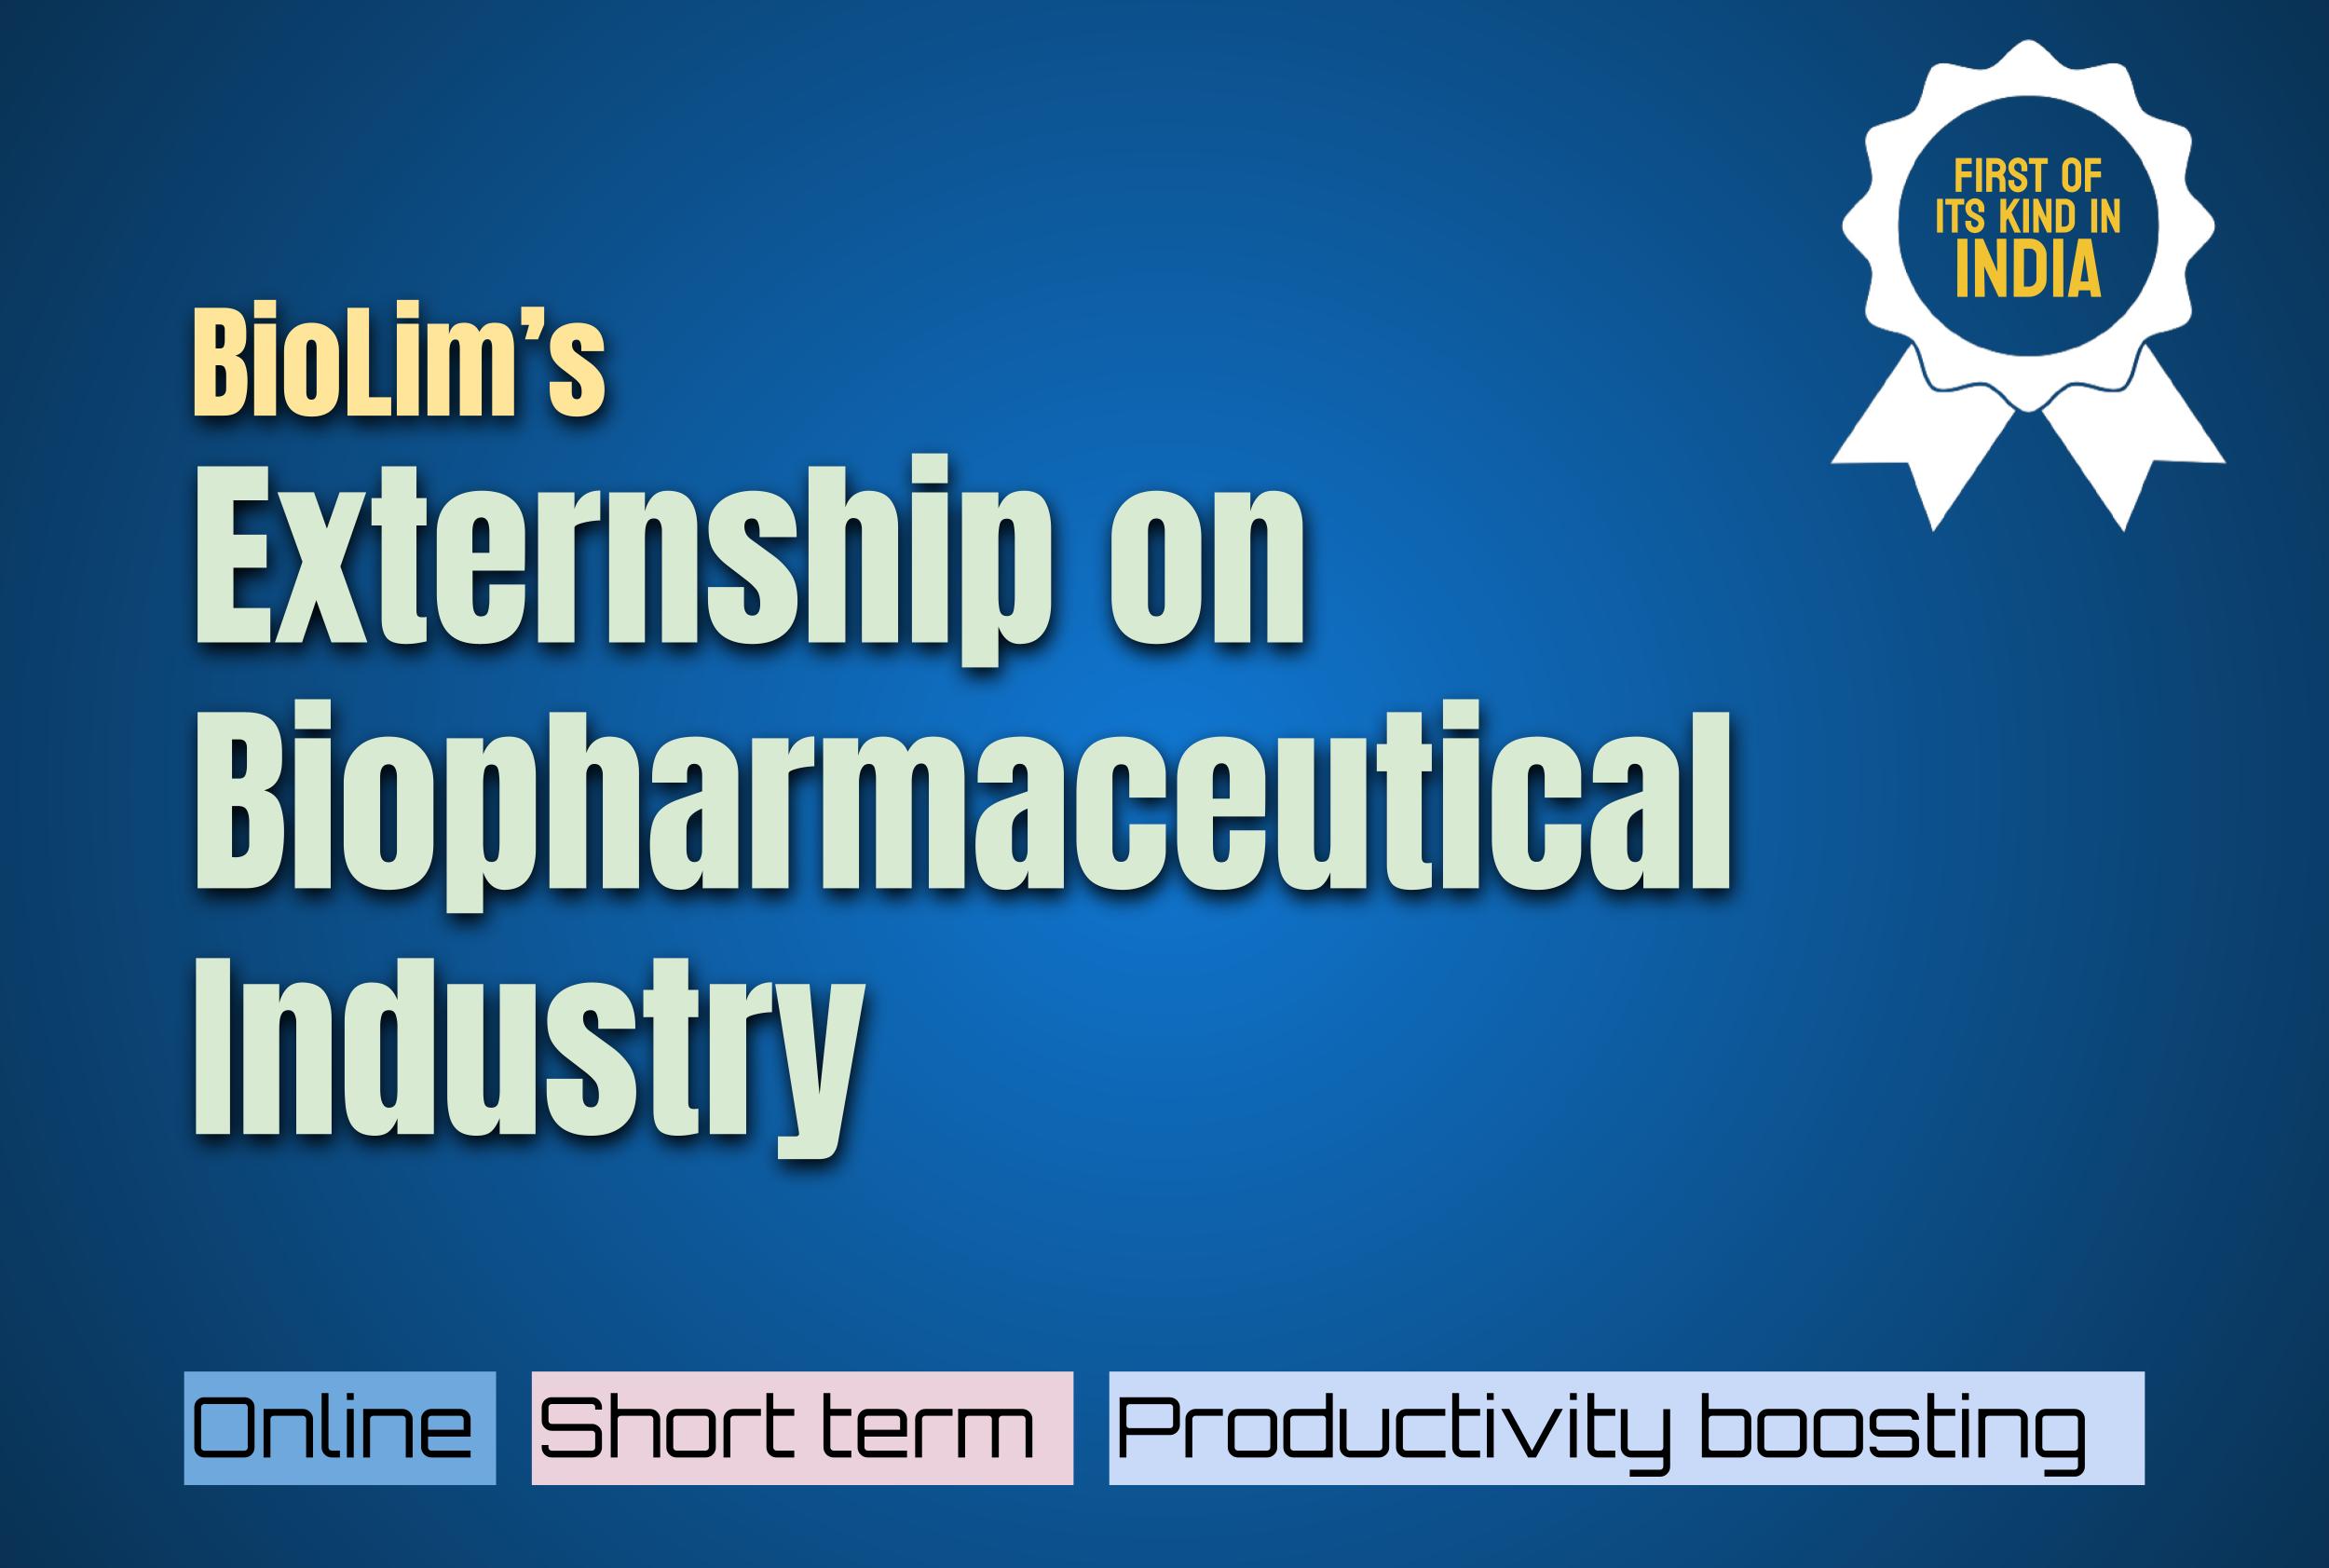 Externship on biopharmaceutical industry